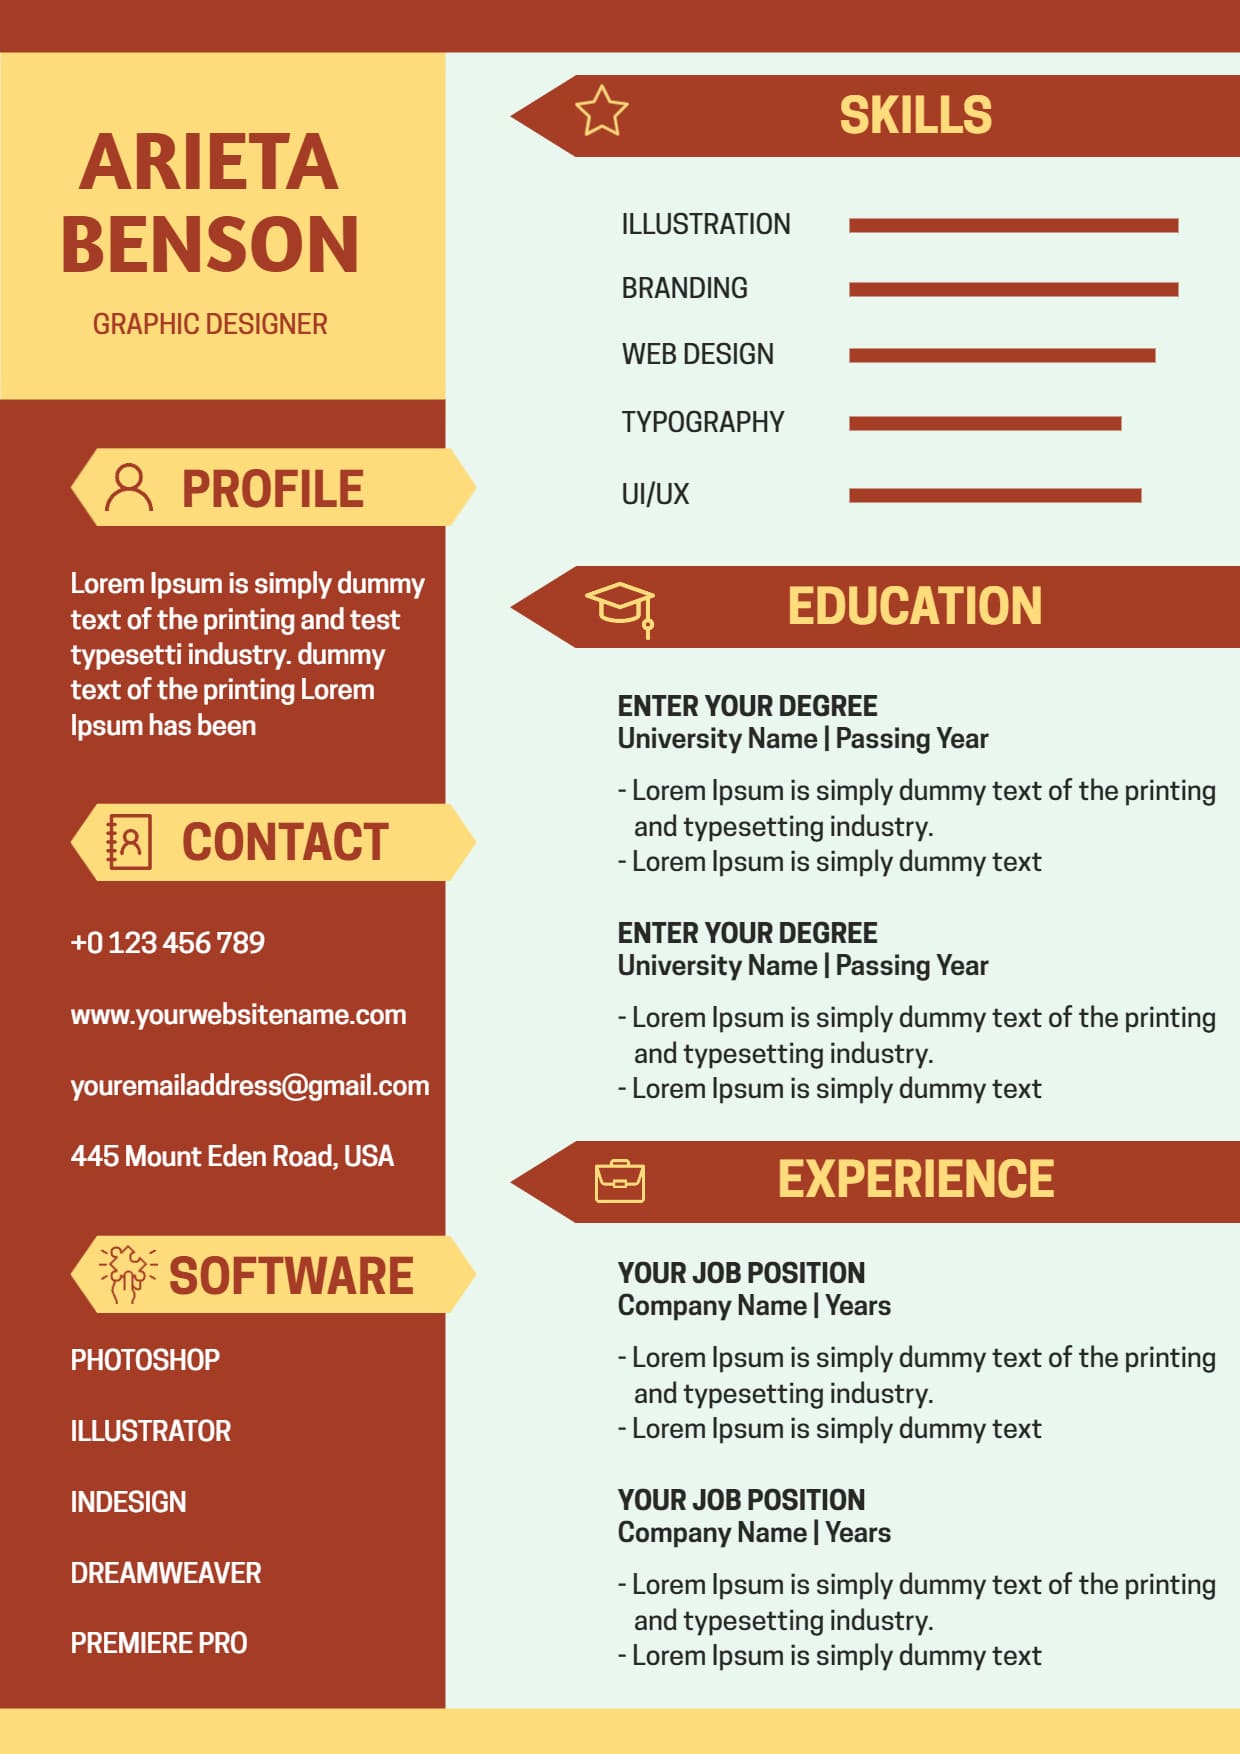 Experienced Graphic Designer Resume examples